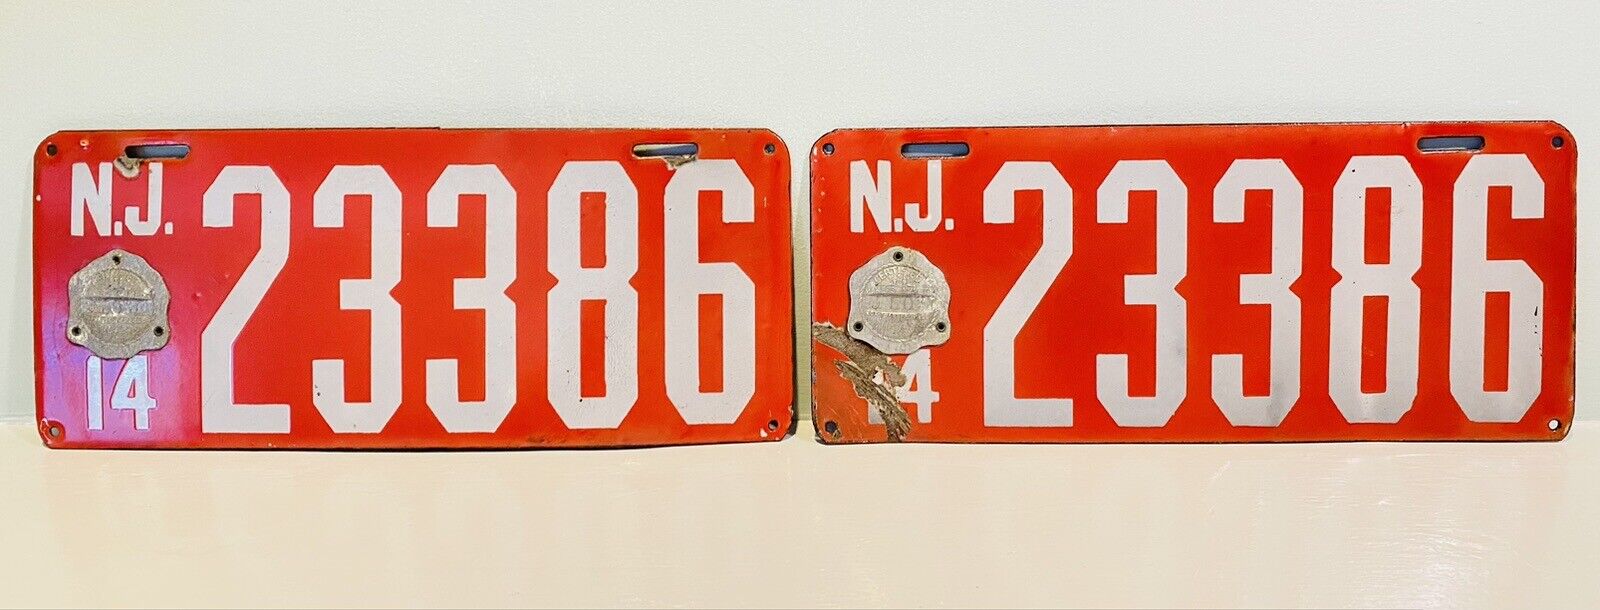 1914 New Jersey Porcelain License Plate PAIR Red White 23386 Garage Decor ALPCA